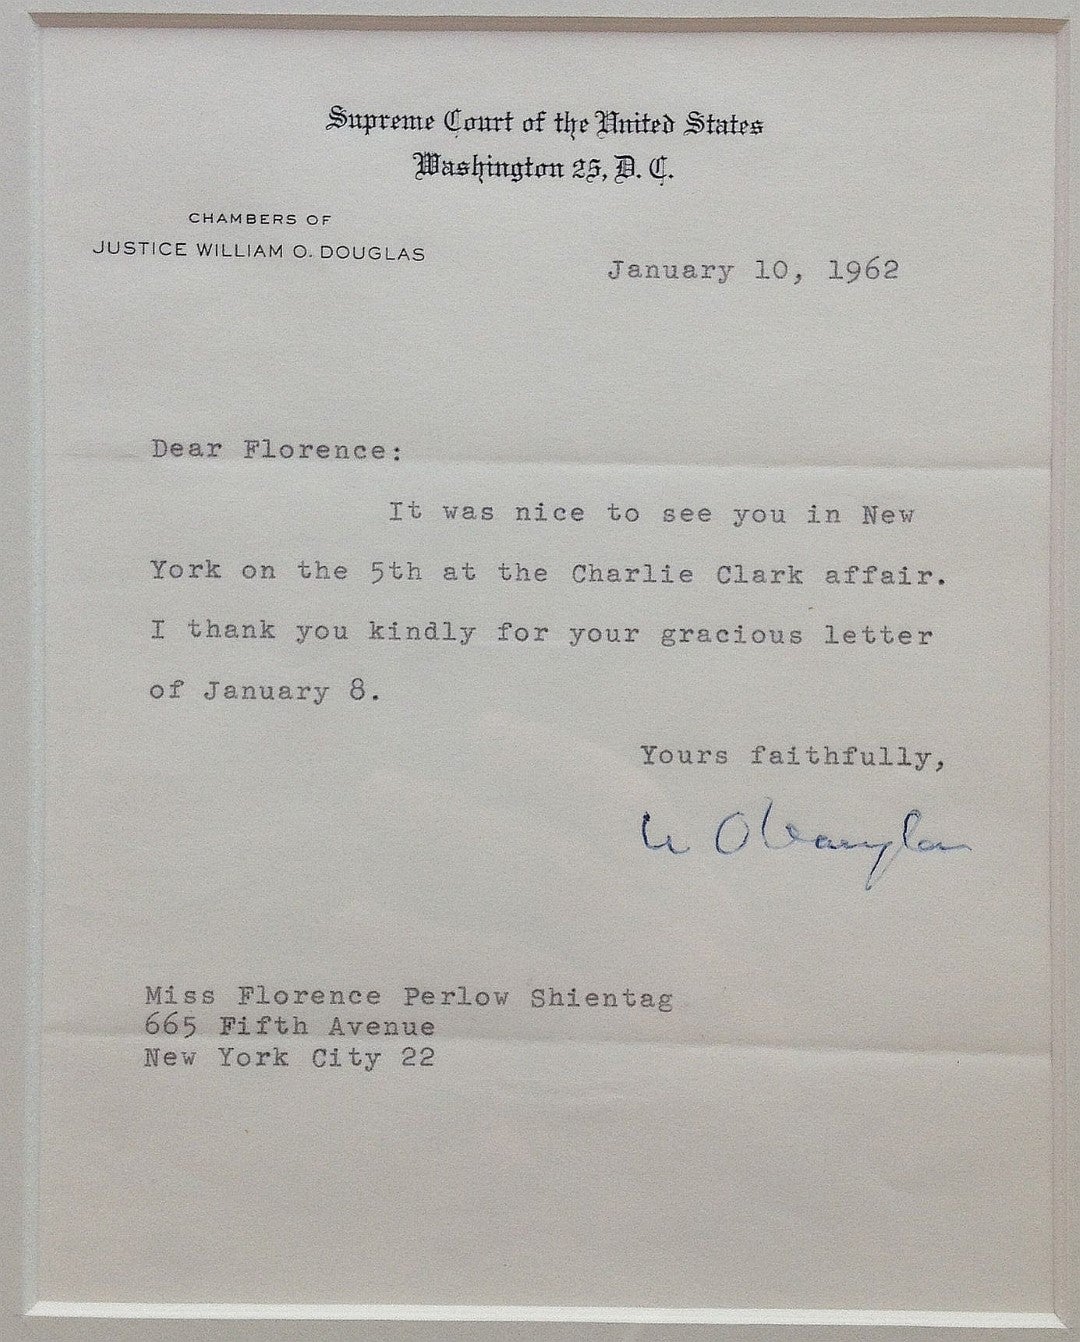 Framed Typed Letter Signed on Supreme Court letterhead